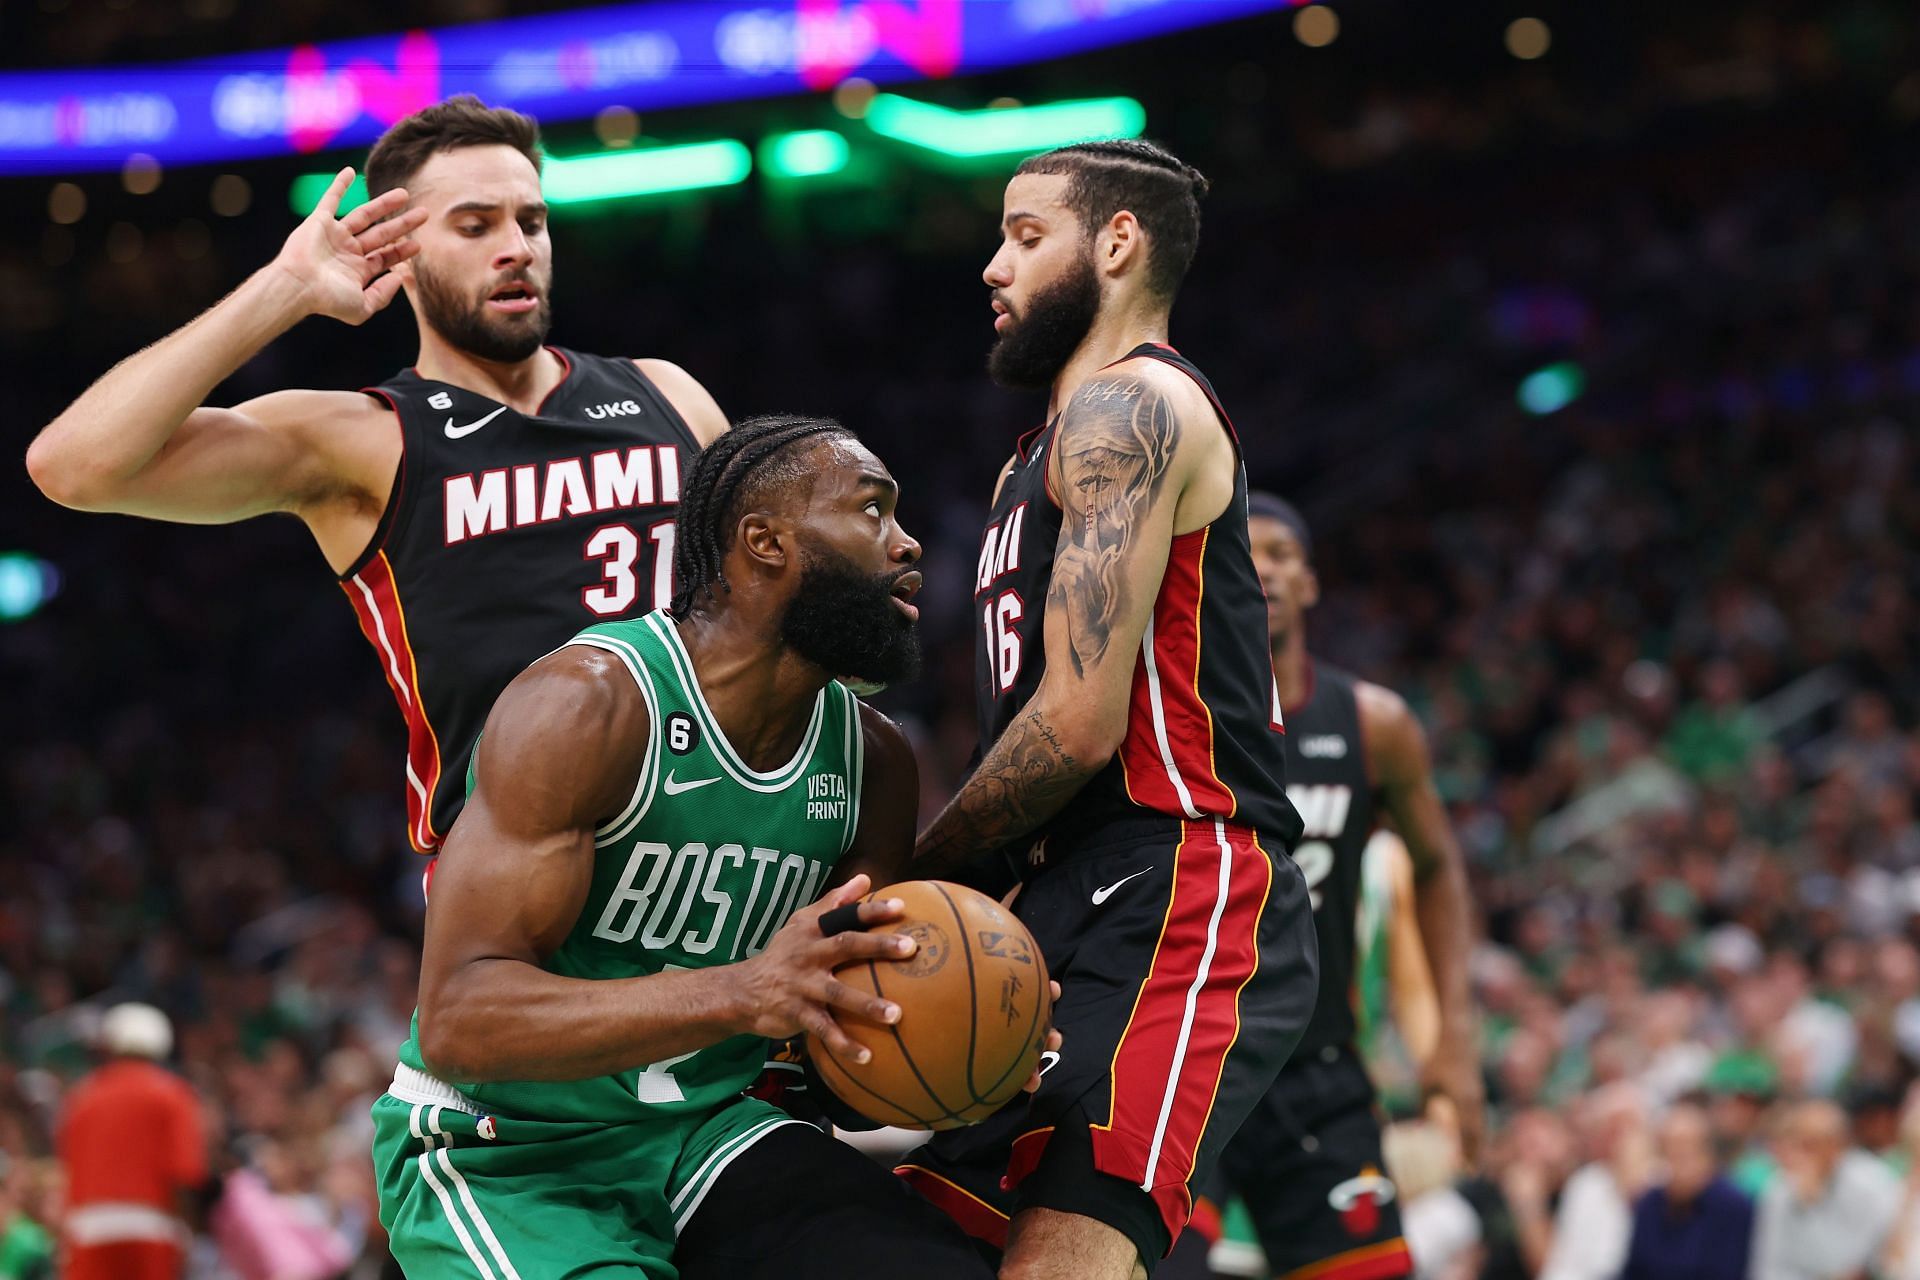 Celtics' Jaylen Brown has Renaissance Man touch